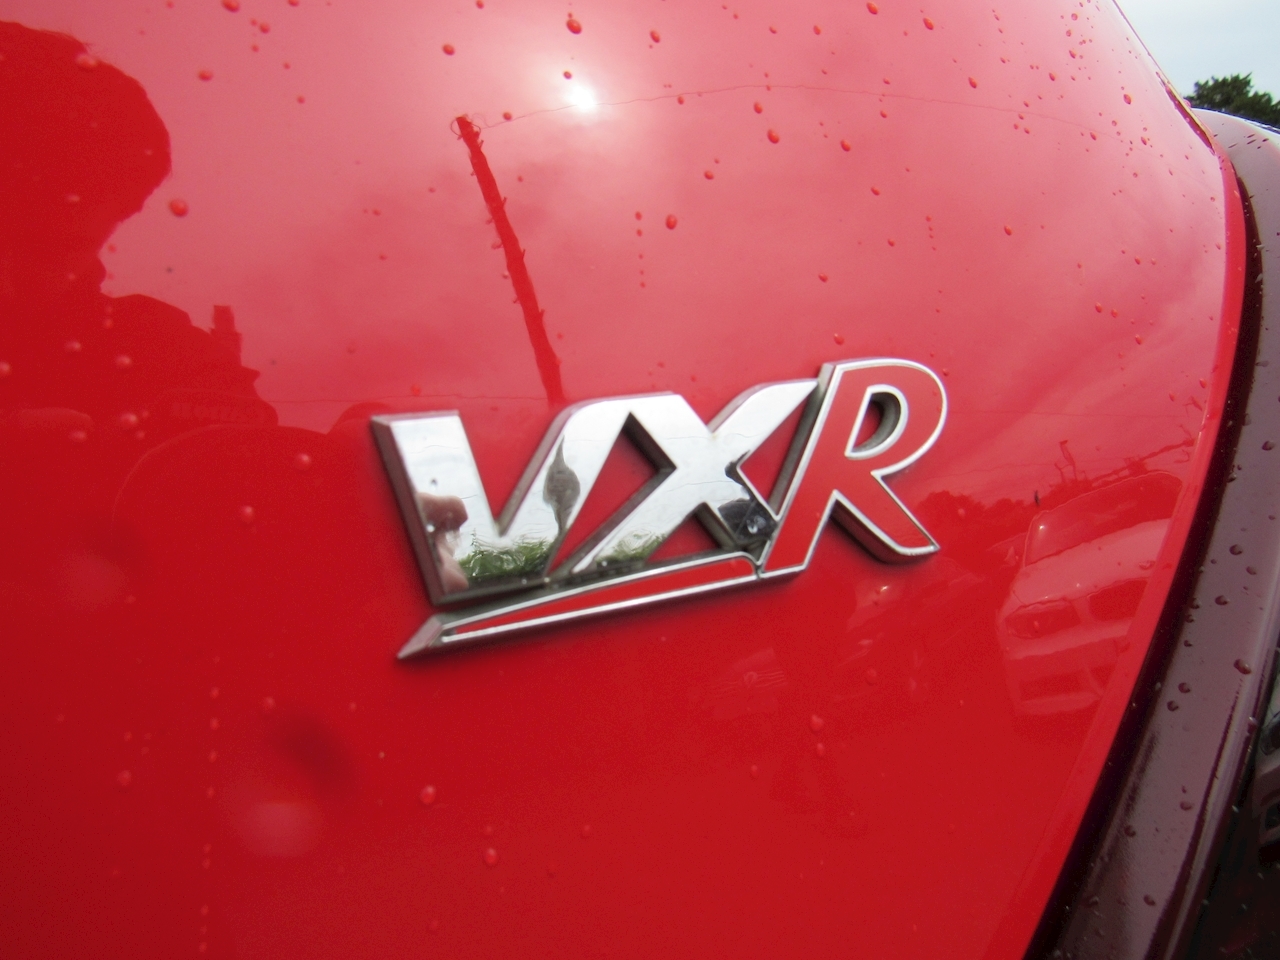 Corsa Vxr Hatchback 1.6 Manual Petrol